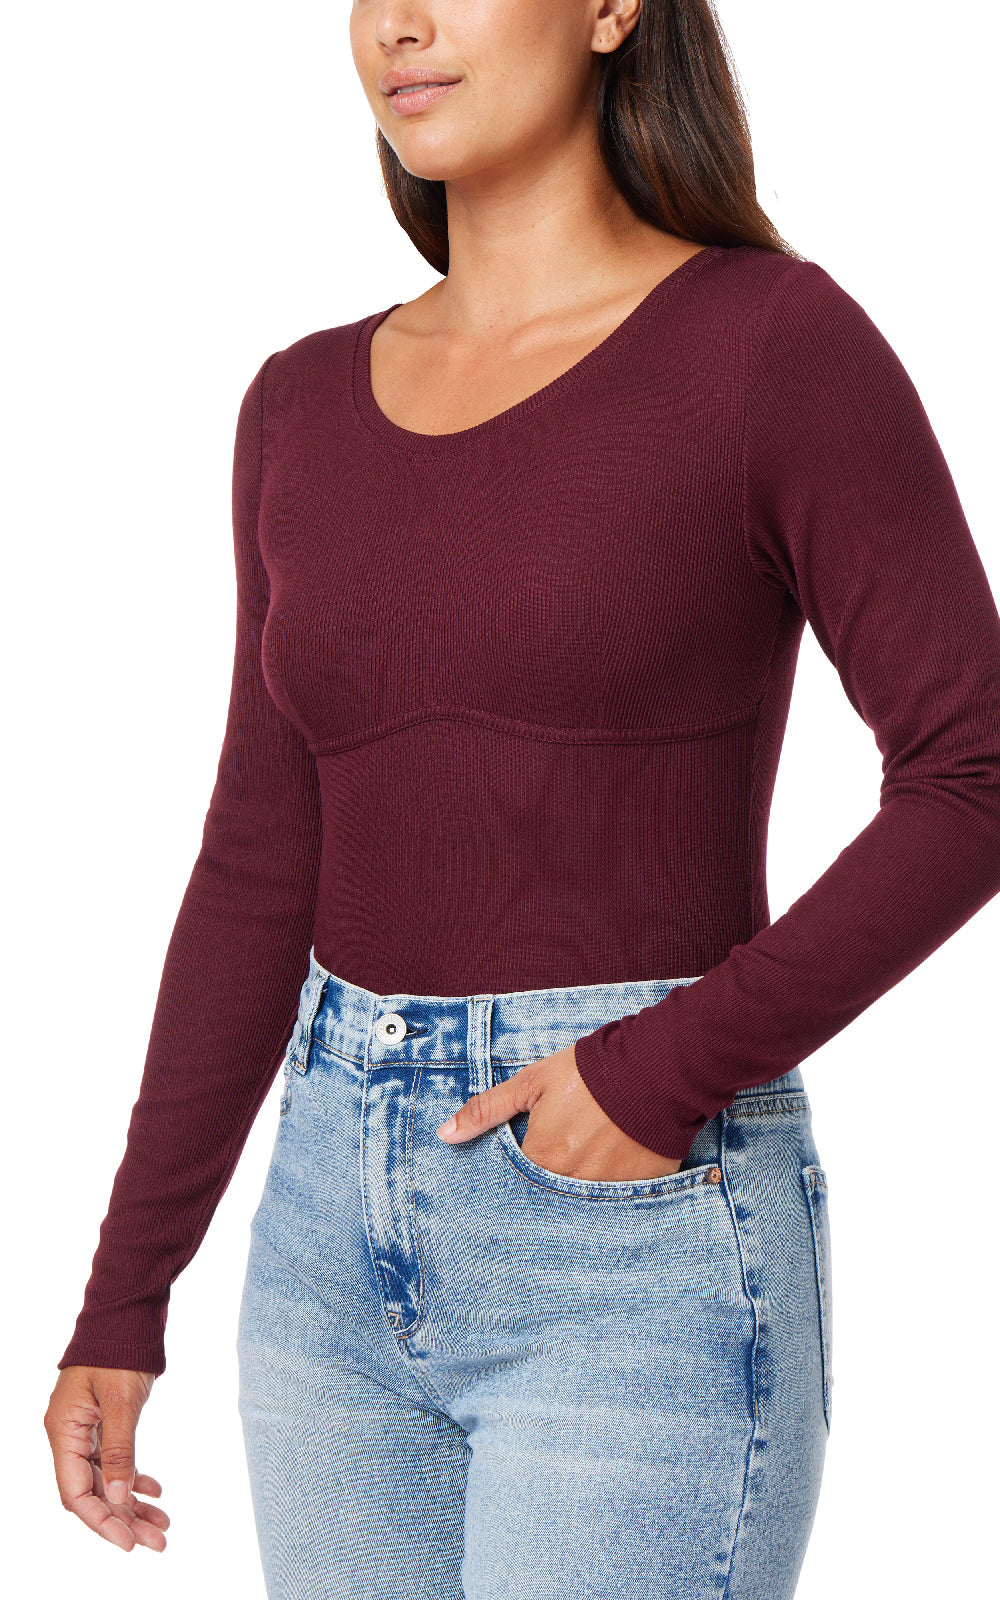 InstaSmooth® Victoria Seamless Bodysuit – WallFlower Jeans